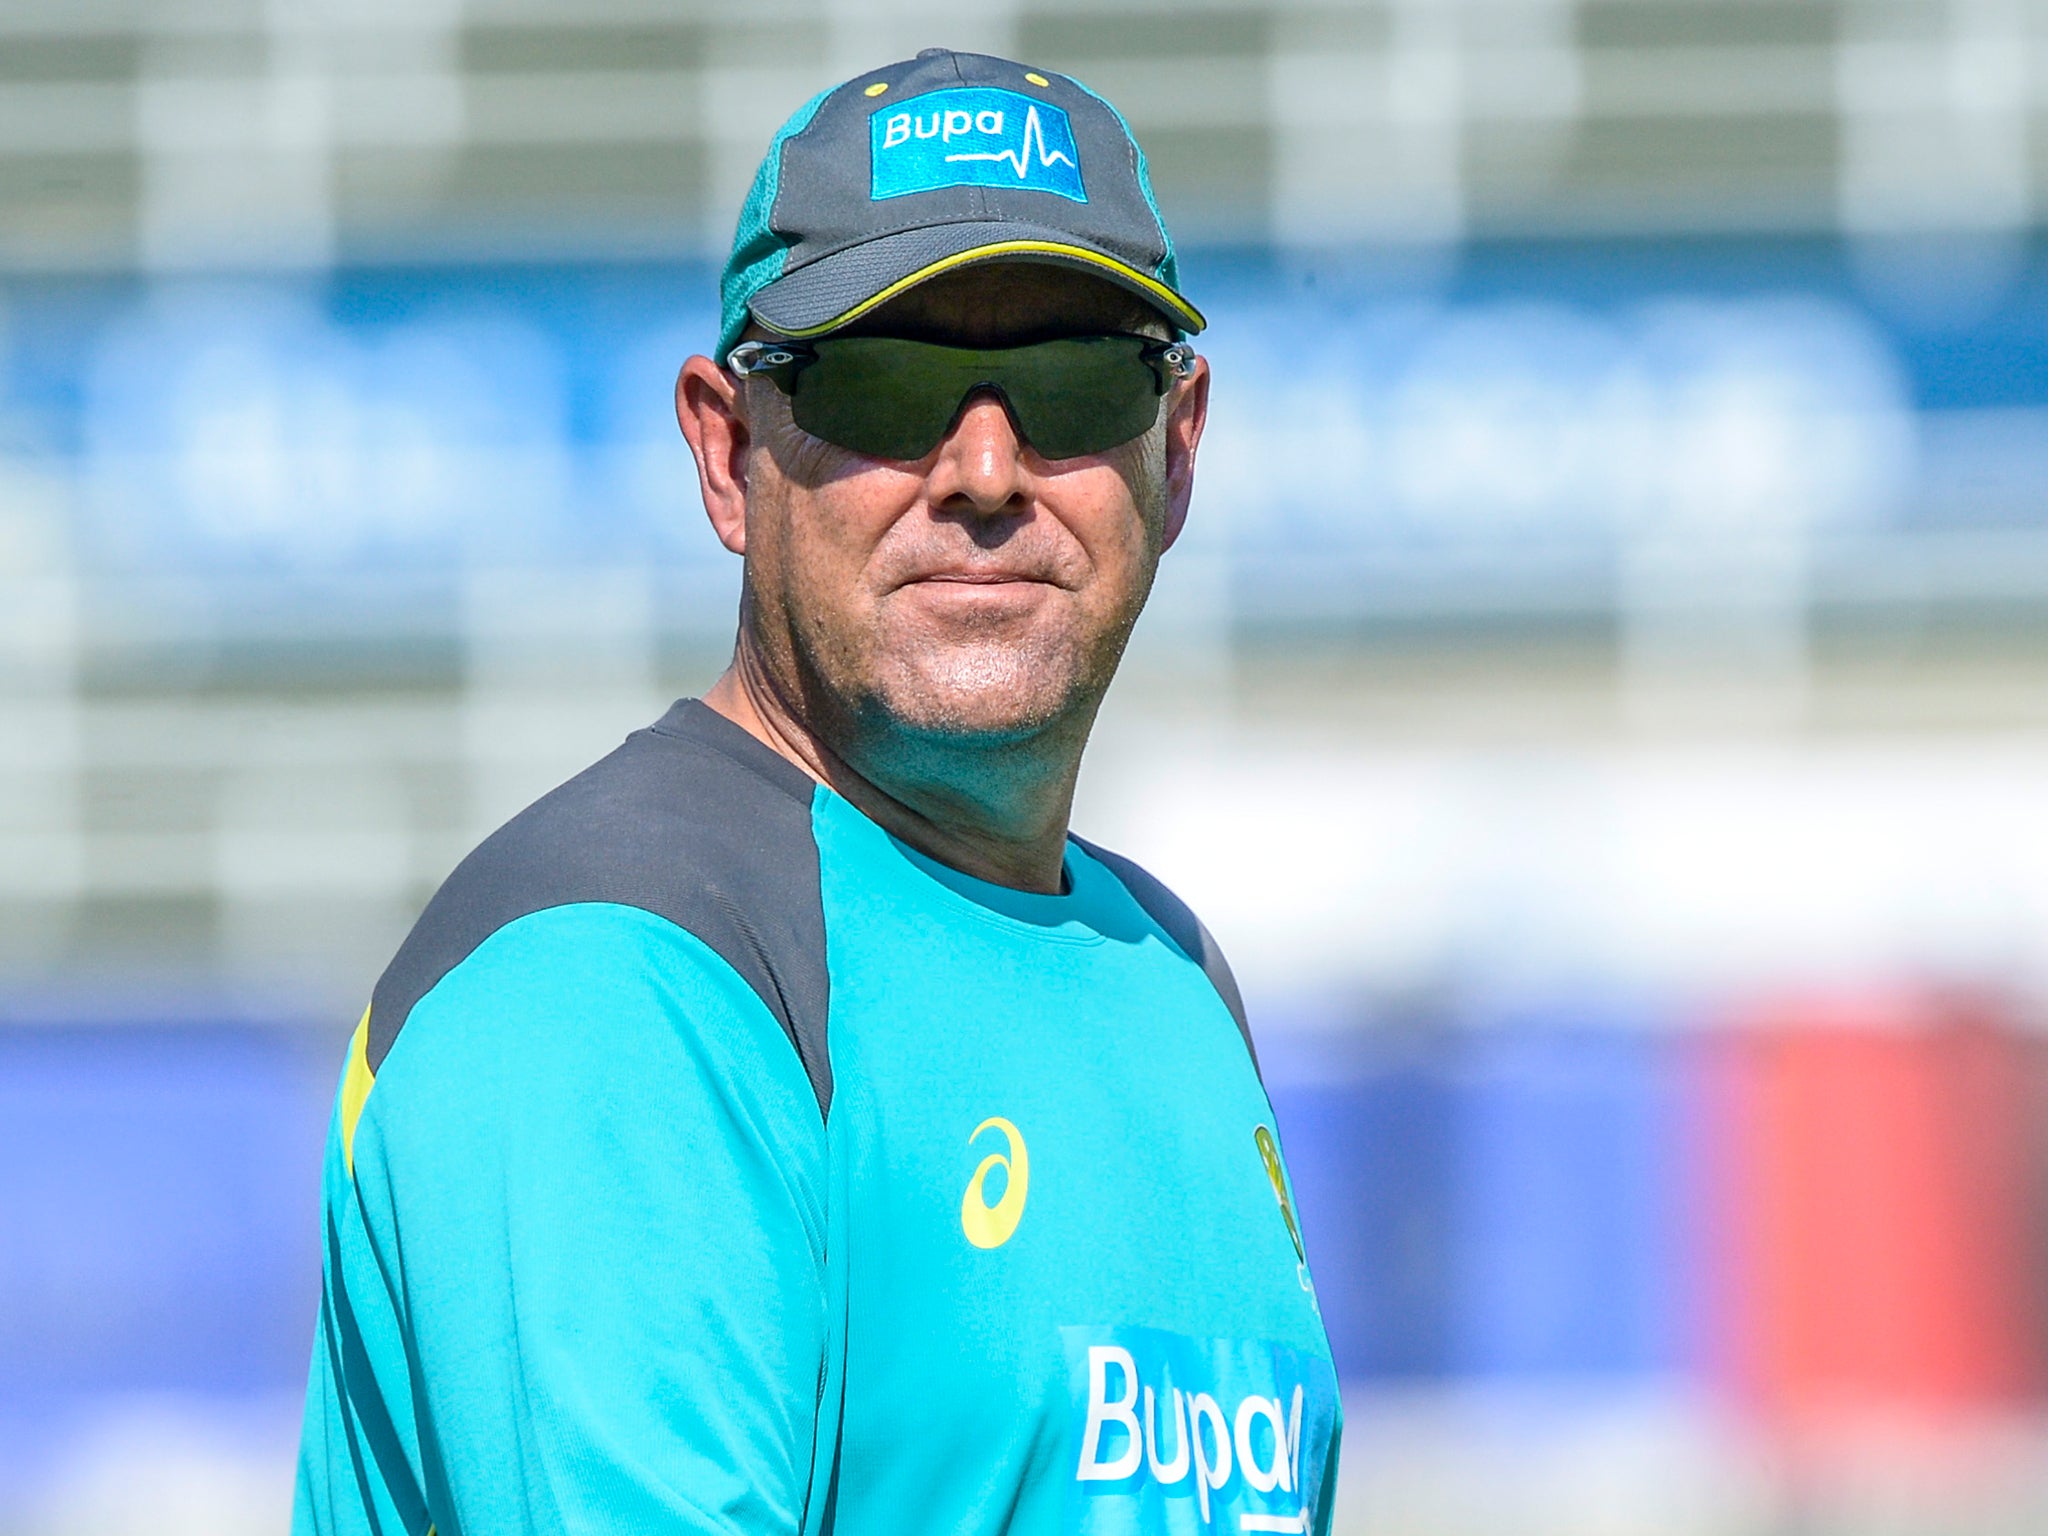 Darren lehmann will resign as Australia coach after this Test